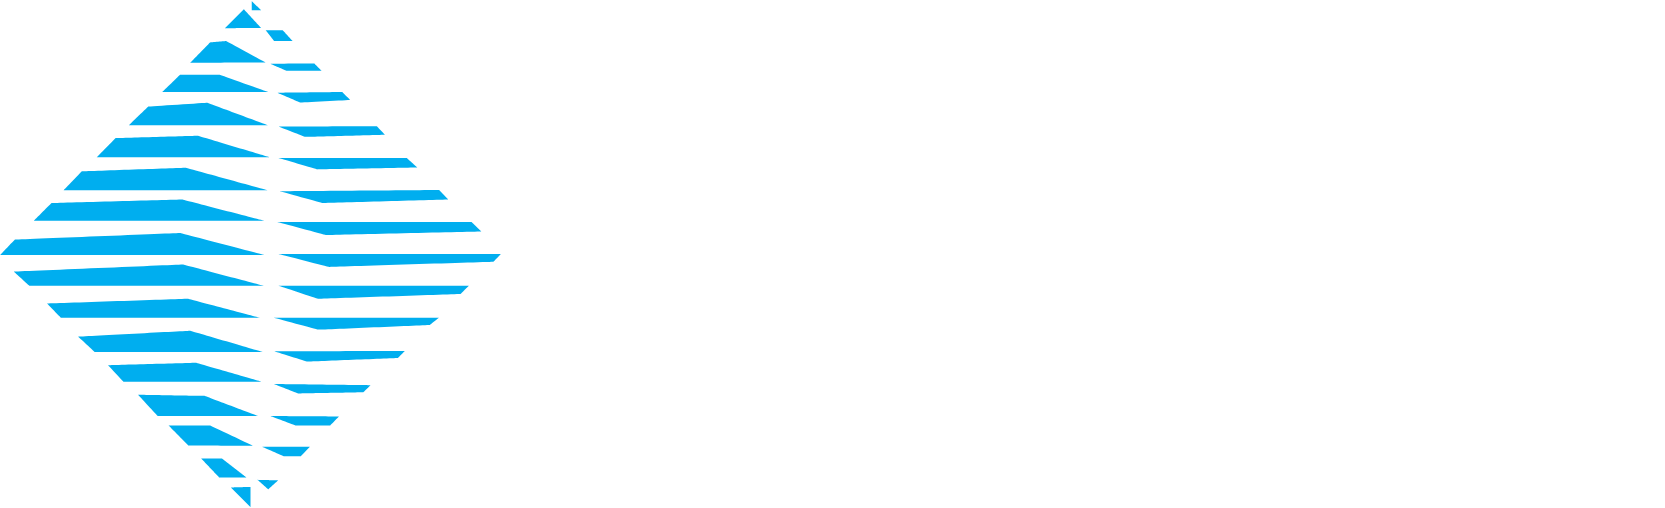 Oneok logo grand pour les fonds sombres (PNG transparent)